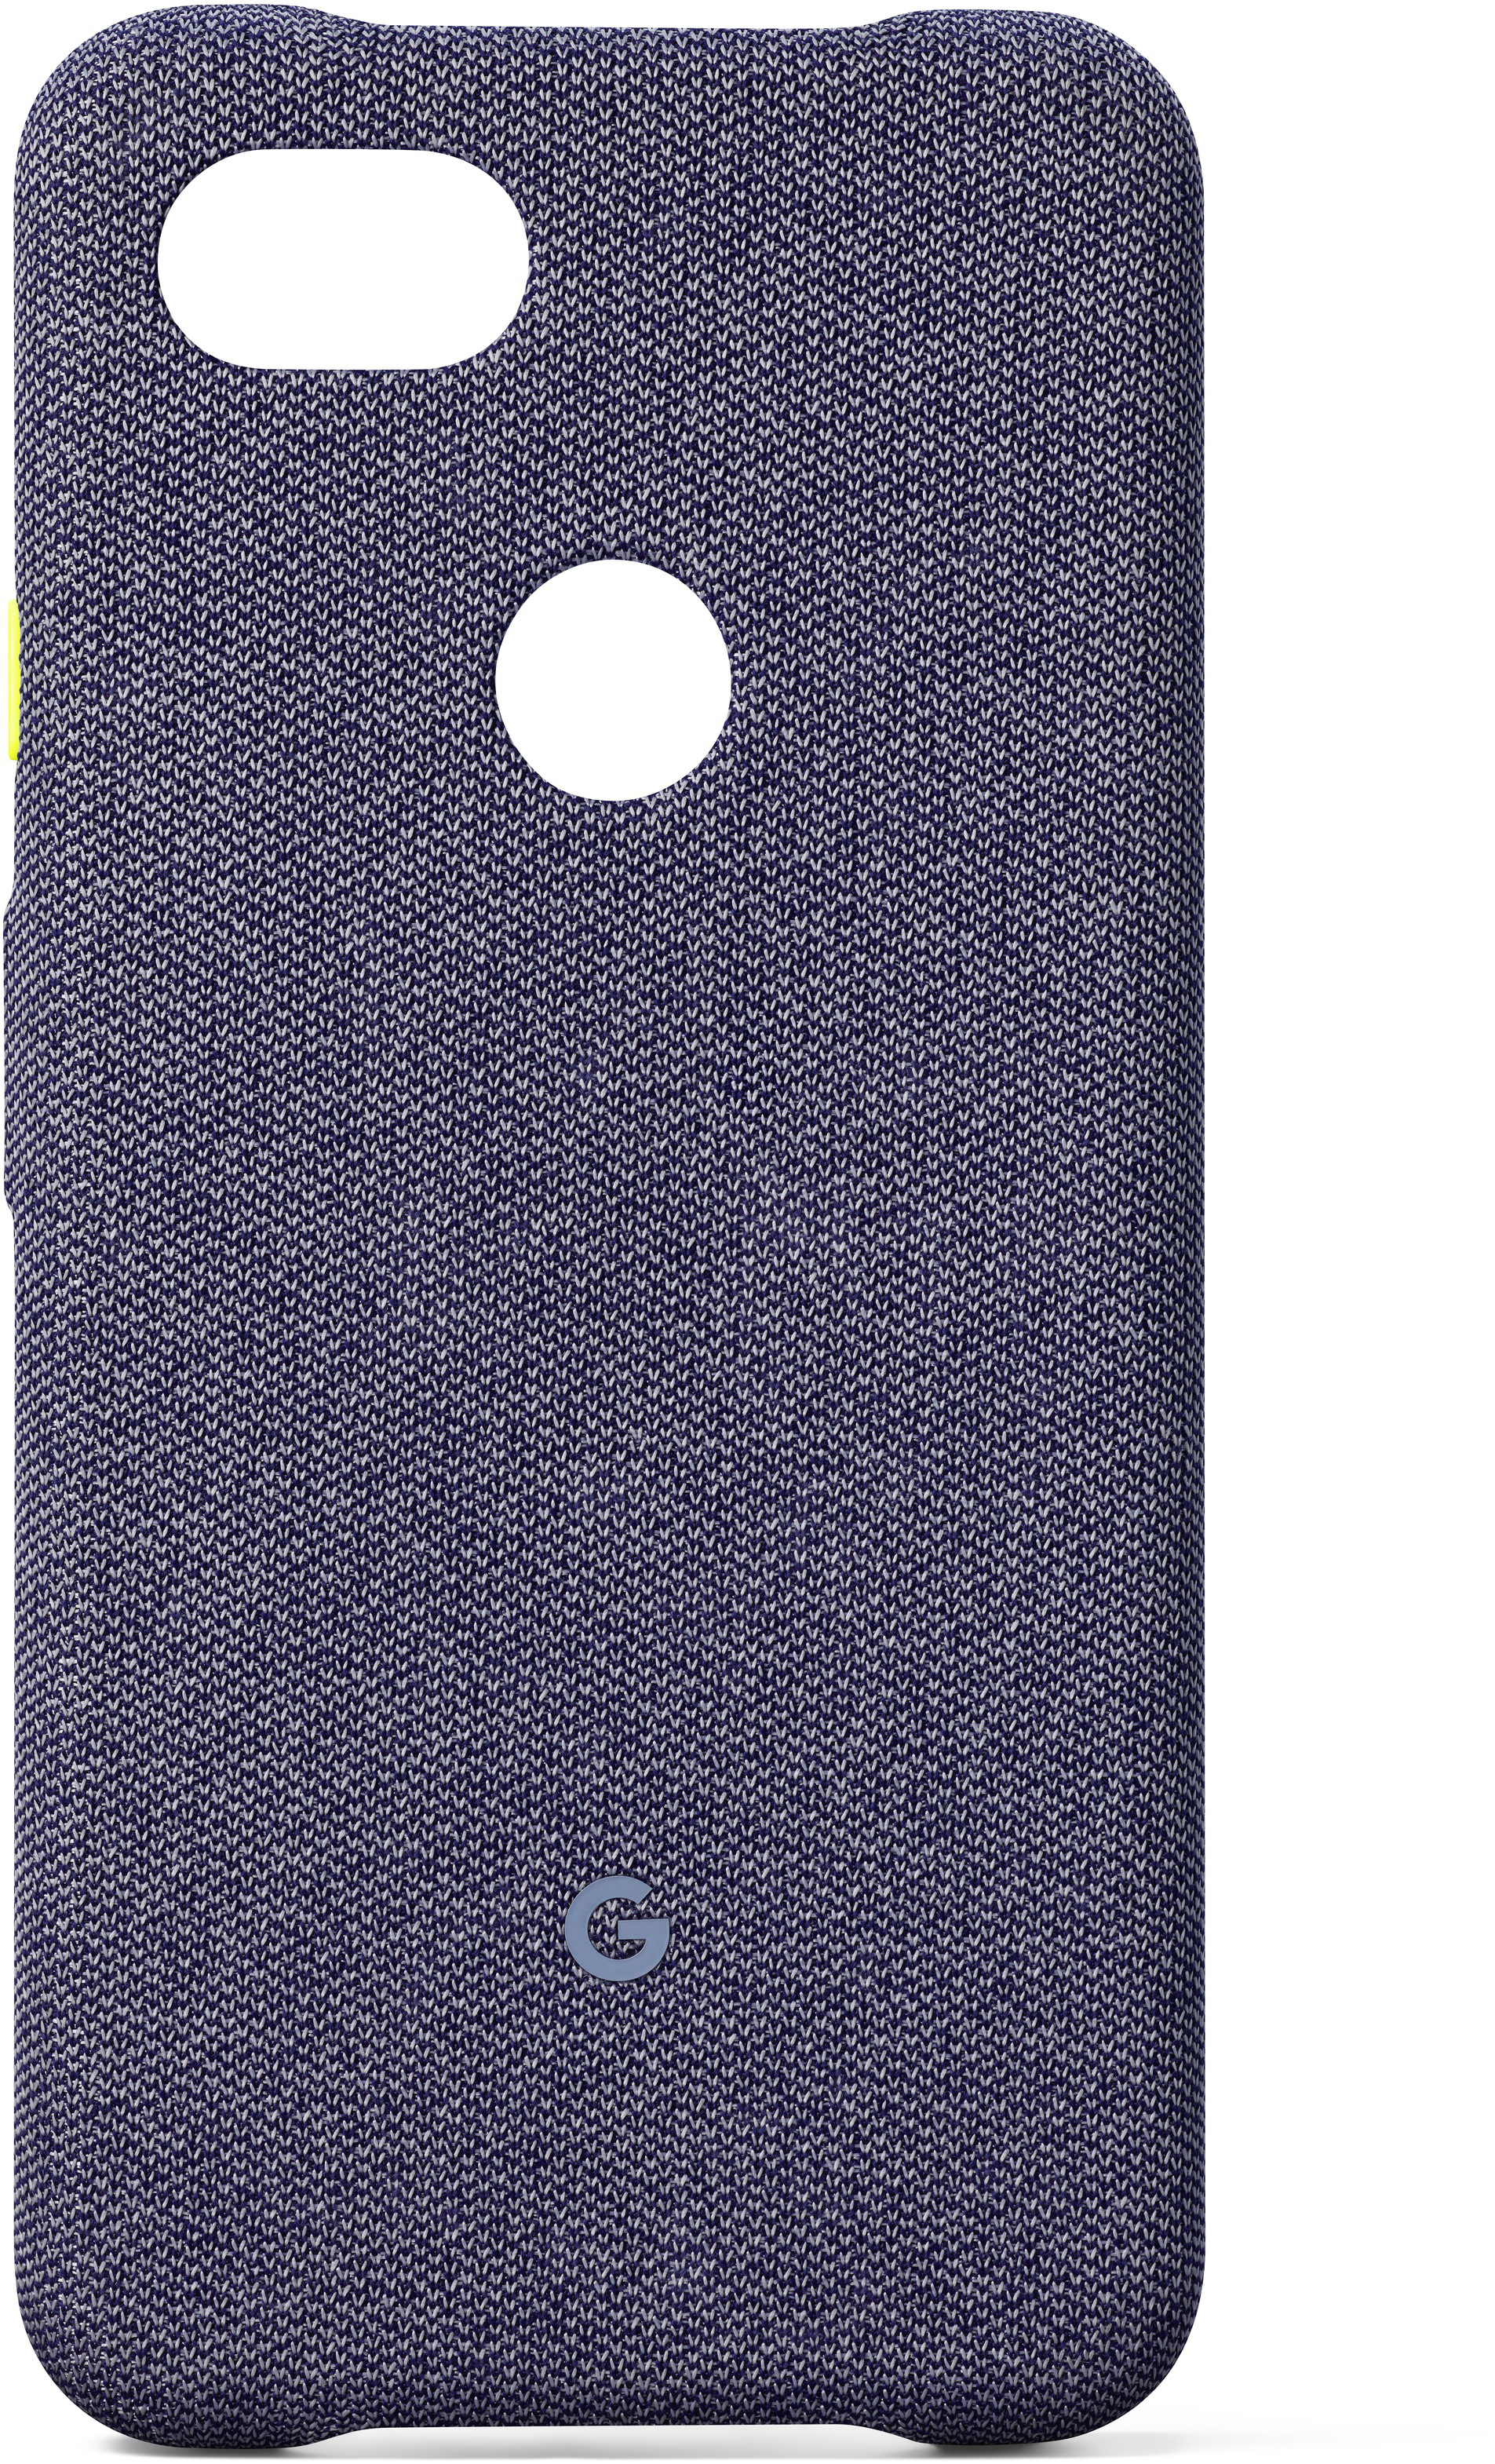 XL, Pixel Jeansblau Backcover, Google, Case, GOOGLE 3a